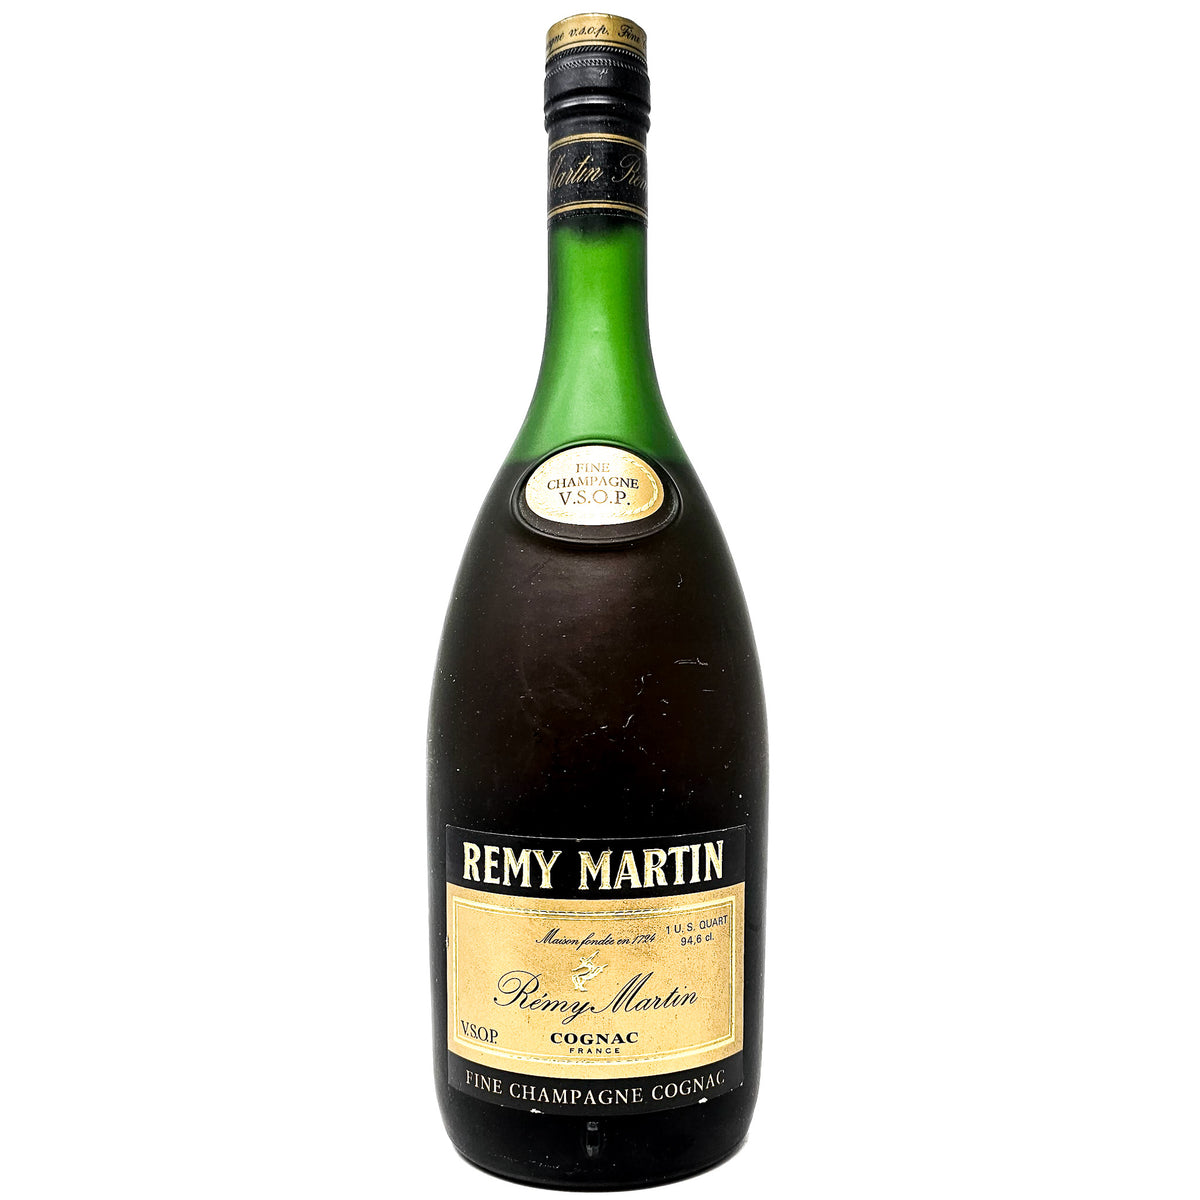 Remy Martin VSOP Fine Champagne Cognac, 94.6cl (1 US Quart) — Old 